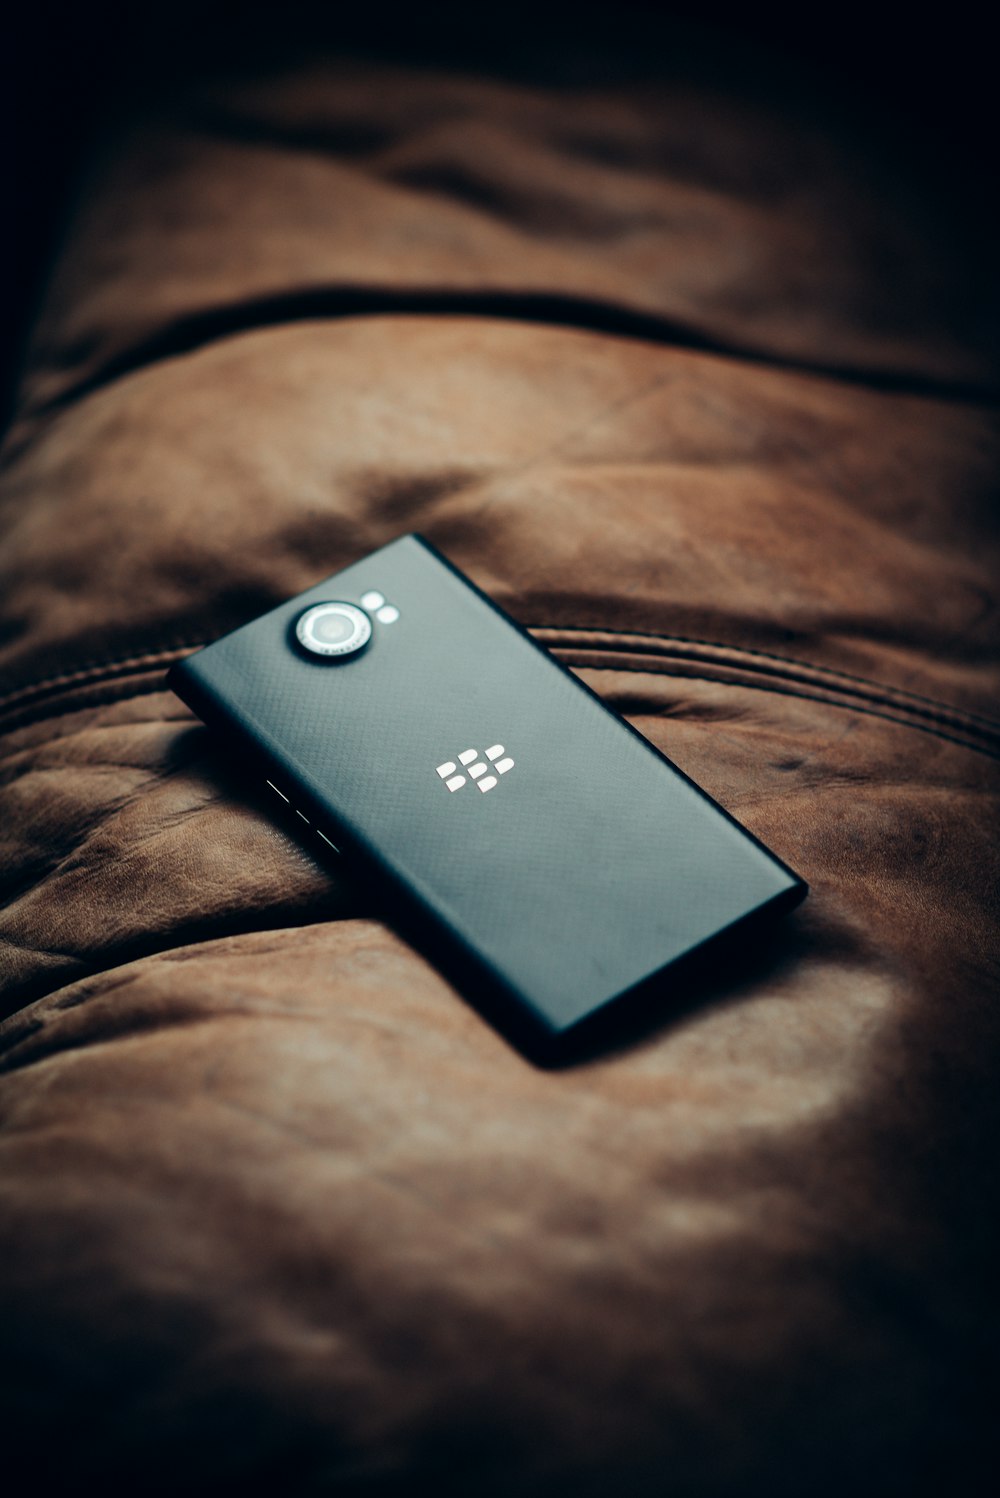 black lg smartphone on brown textile